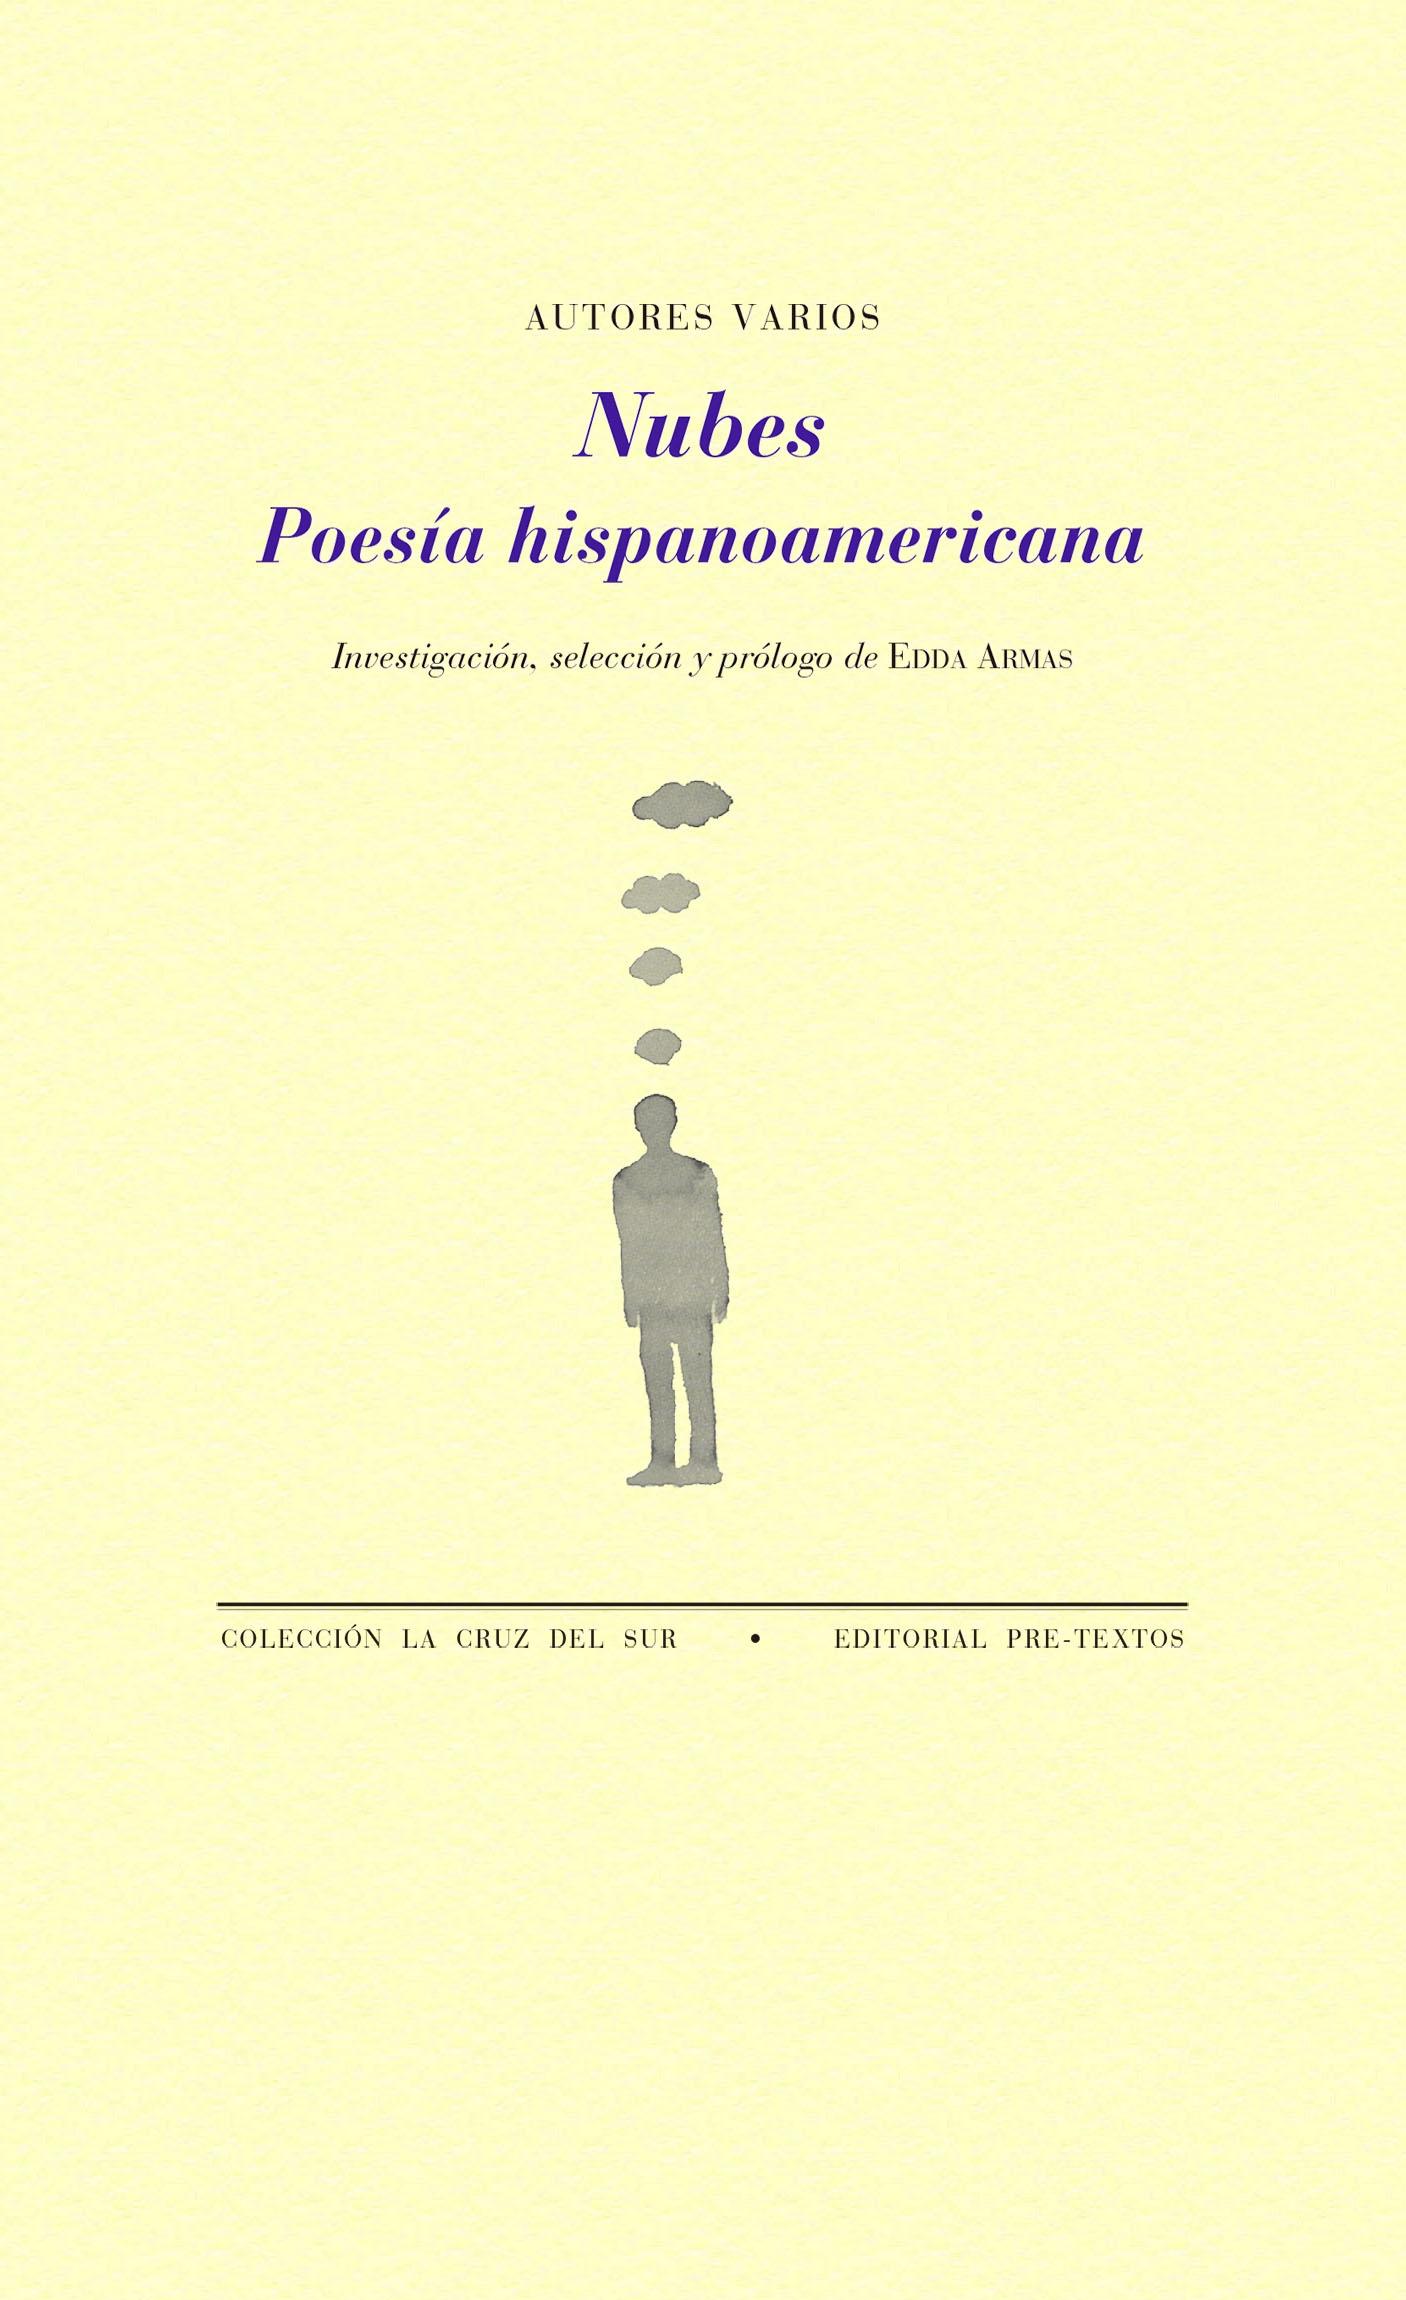 Nubes "Poesía hispanoamericana". 